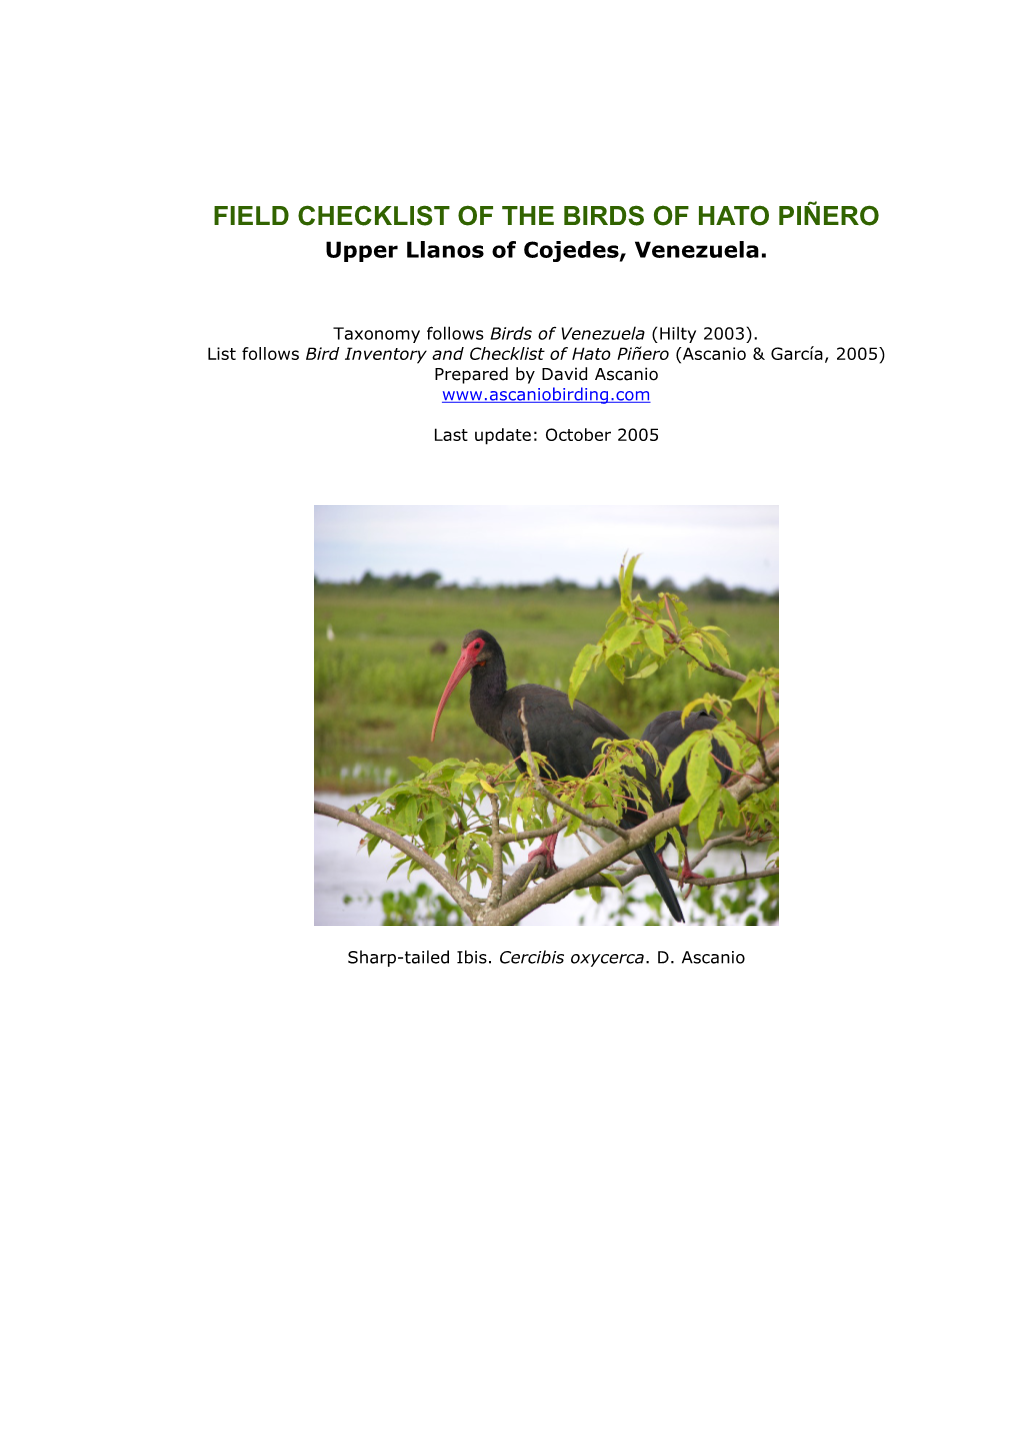 FIELD CHECKLIST of the BIRDS of HATO PIÑERO Upper Llanos of Cojedes, Venezuela